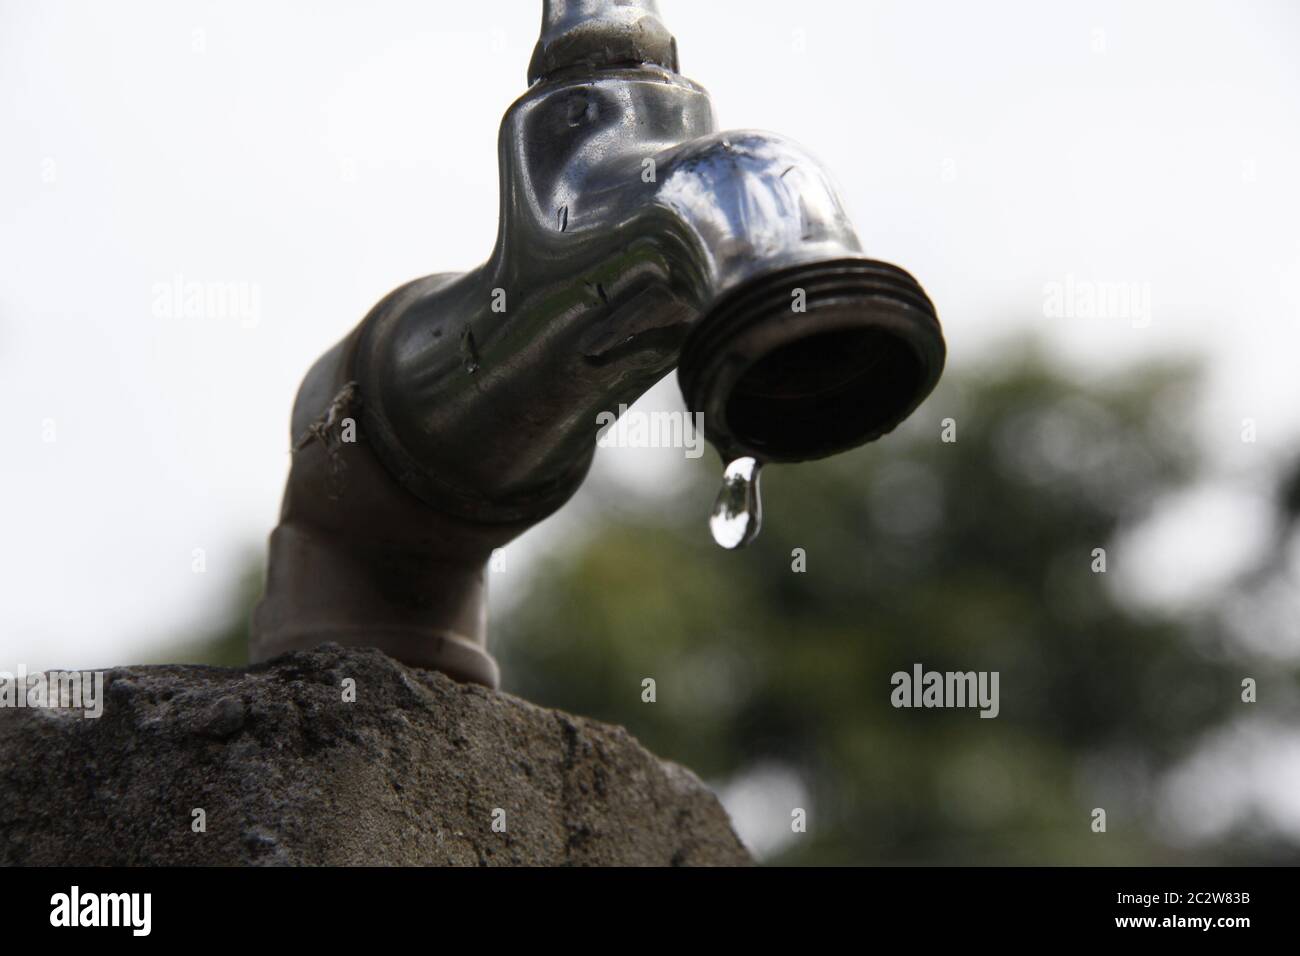 SALVADOR, BAHIA / BRASILIEN - 27. September 2013: Wasserhahn gießt die letzten Tropfen Wasser wegen mangelnder Versorgung (Joa Souza). *** Ortsunterschrift *** Stockfoto